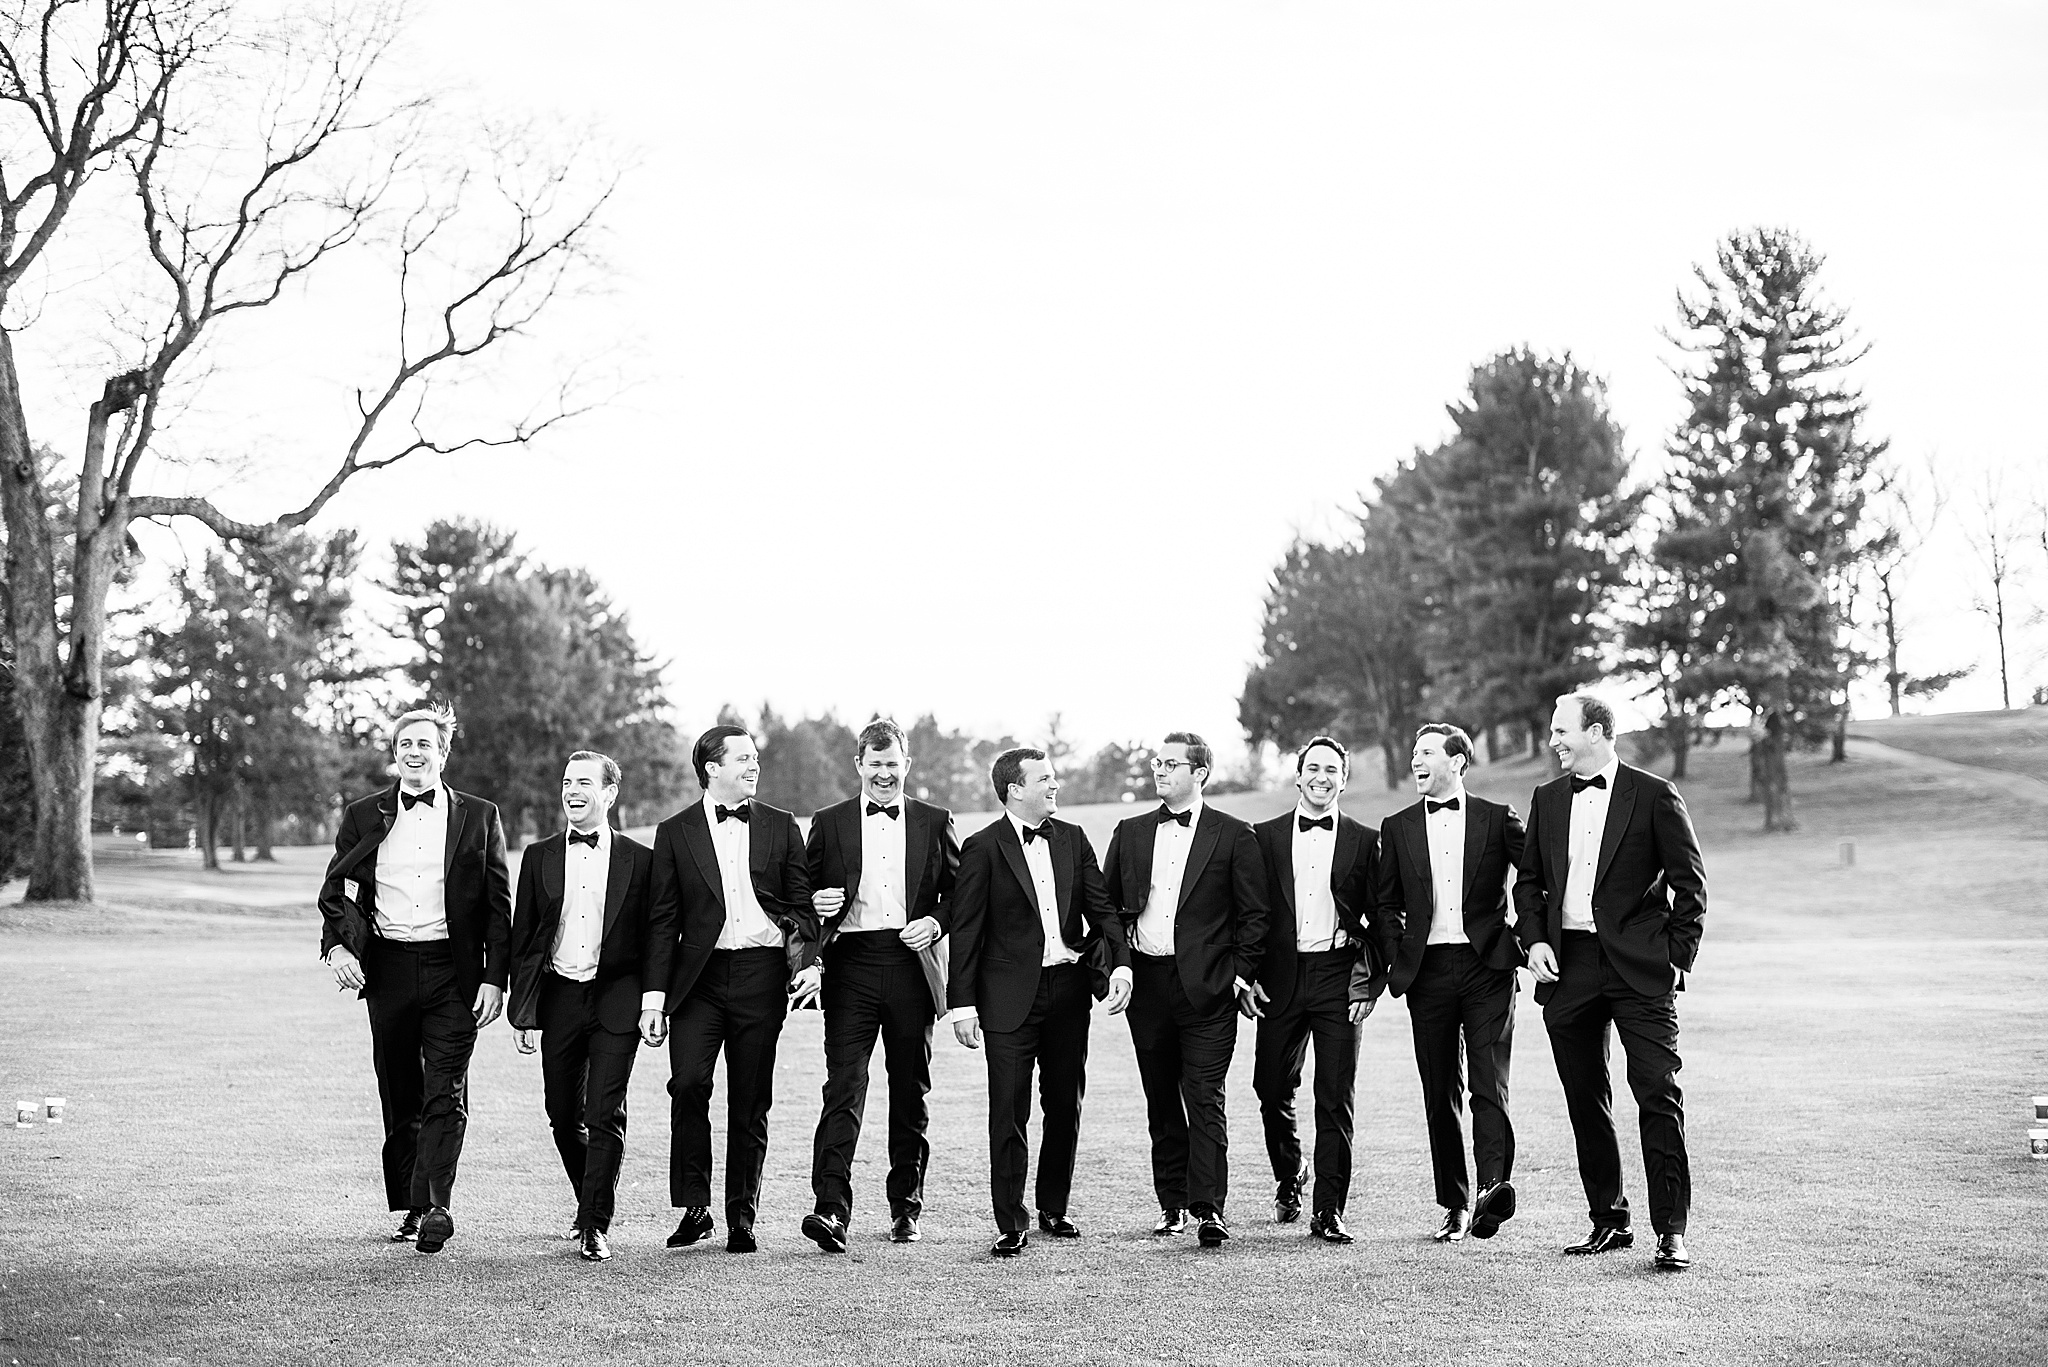 Baltimore Country Club wedding portraits of groomsmen by Alexandra Mandato Photography